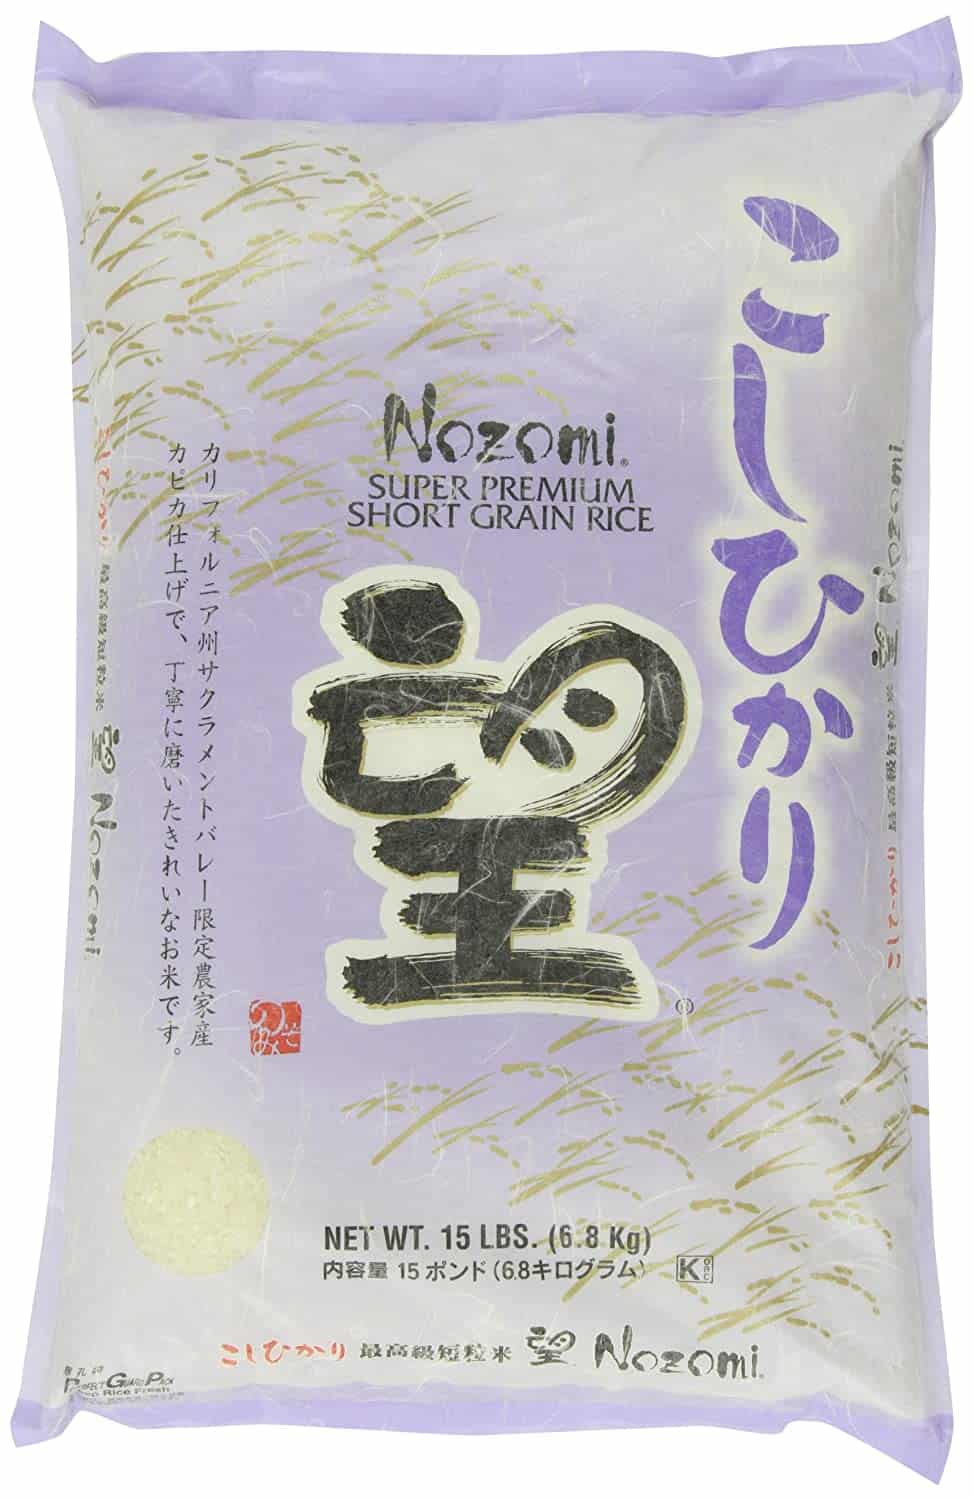 Arroz de sushi de grano corto Nozomi